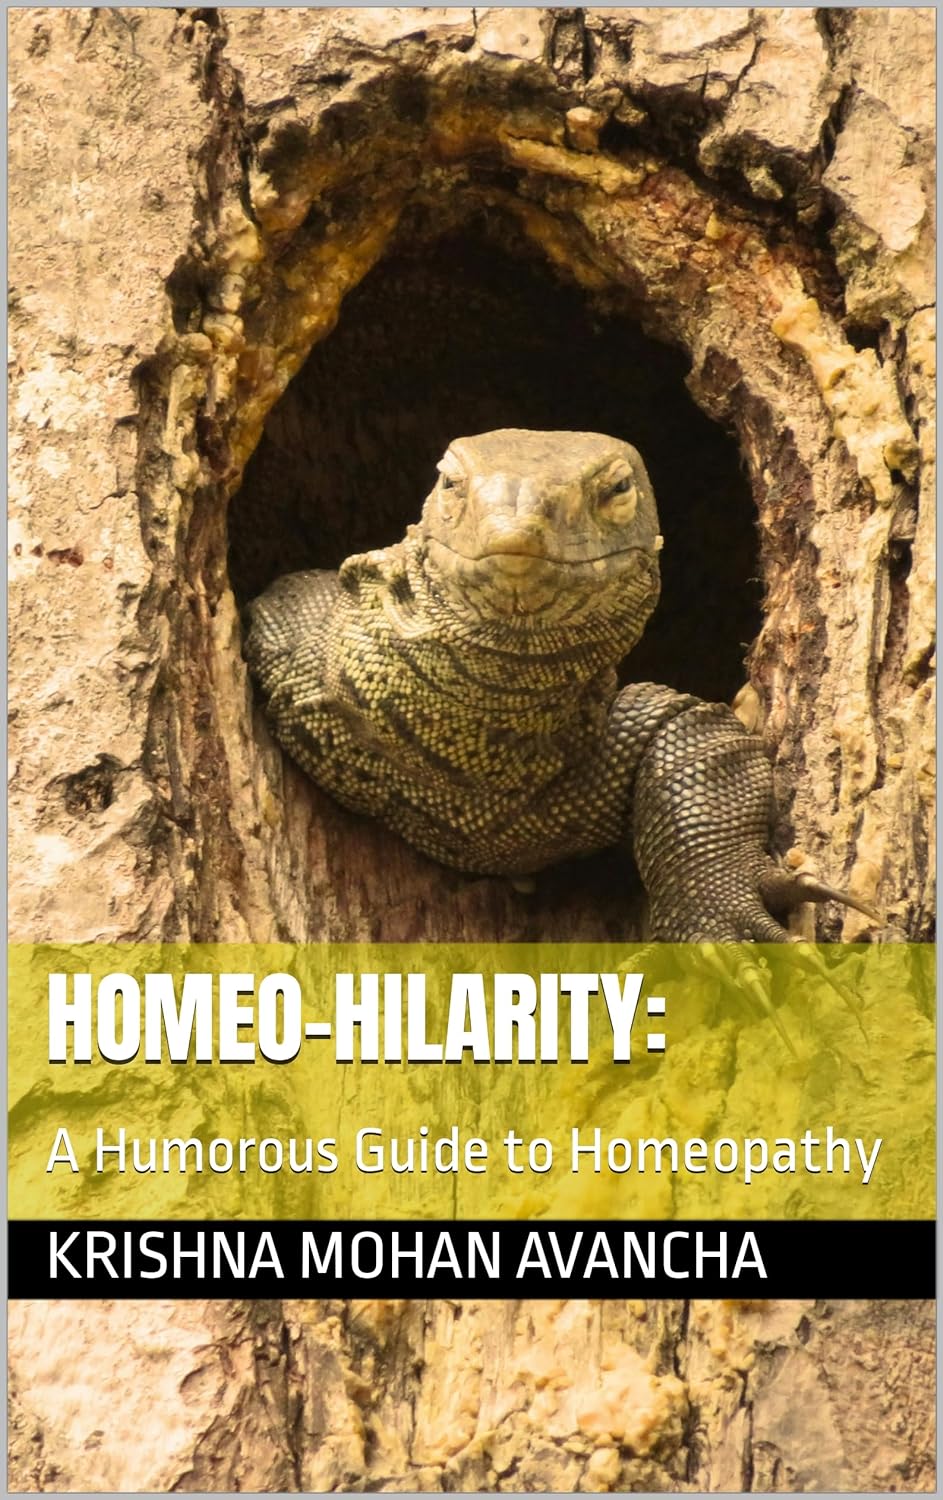 Homeo-Hilarity: : A Humorous Guide to Homeopathy